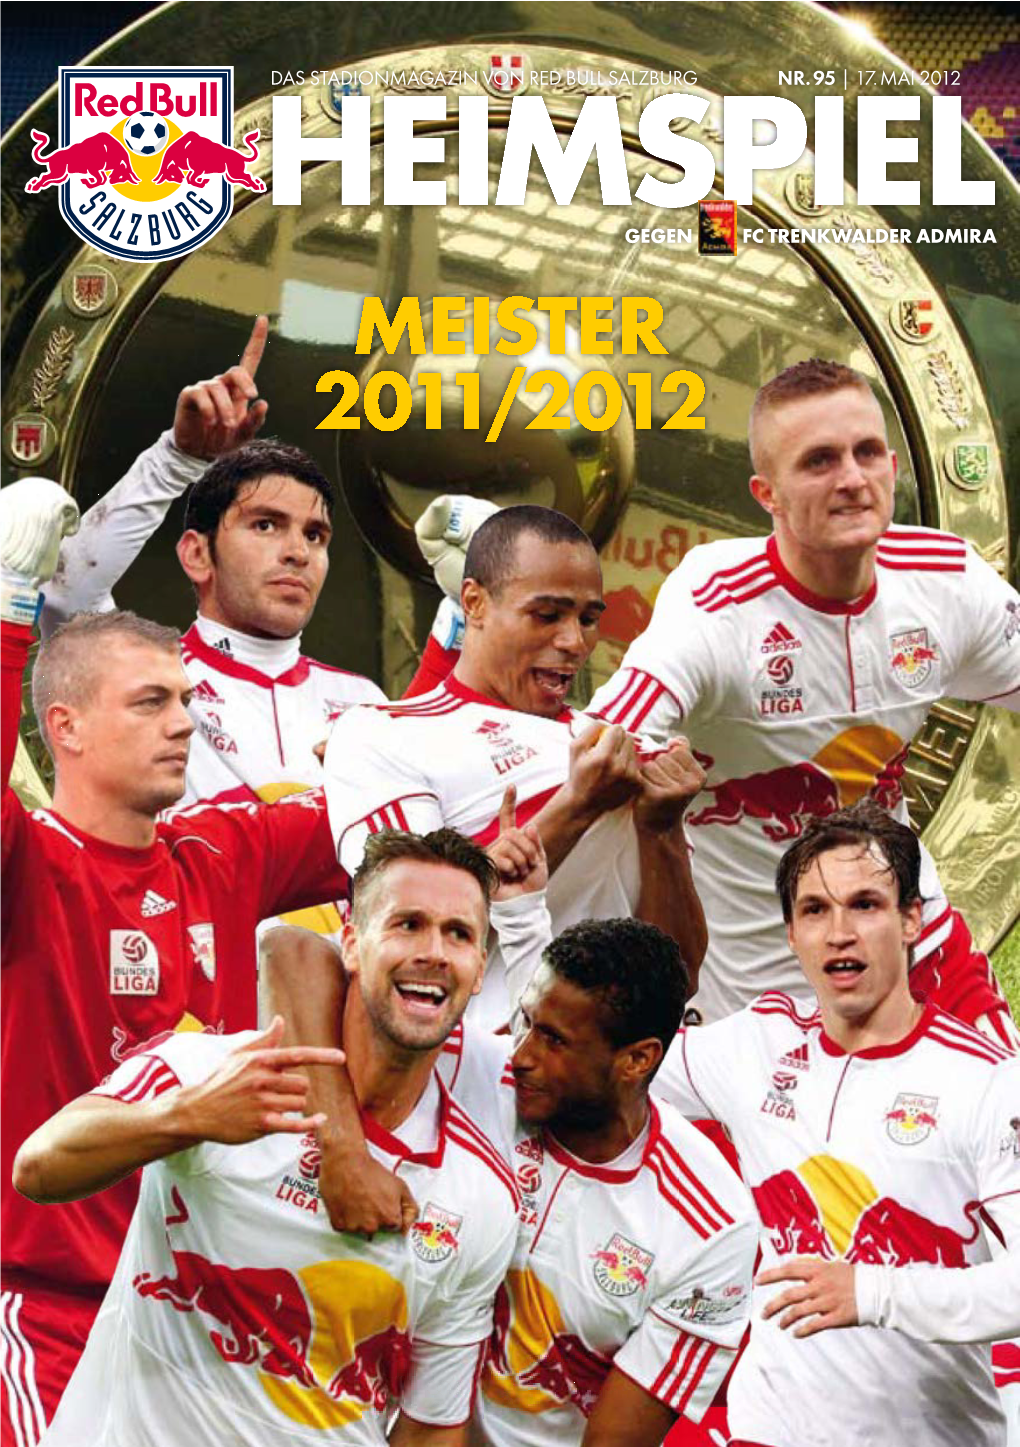 Meister 2011/2012